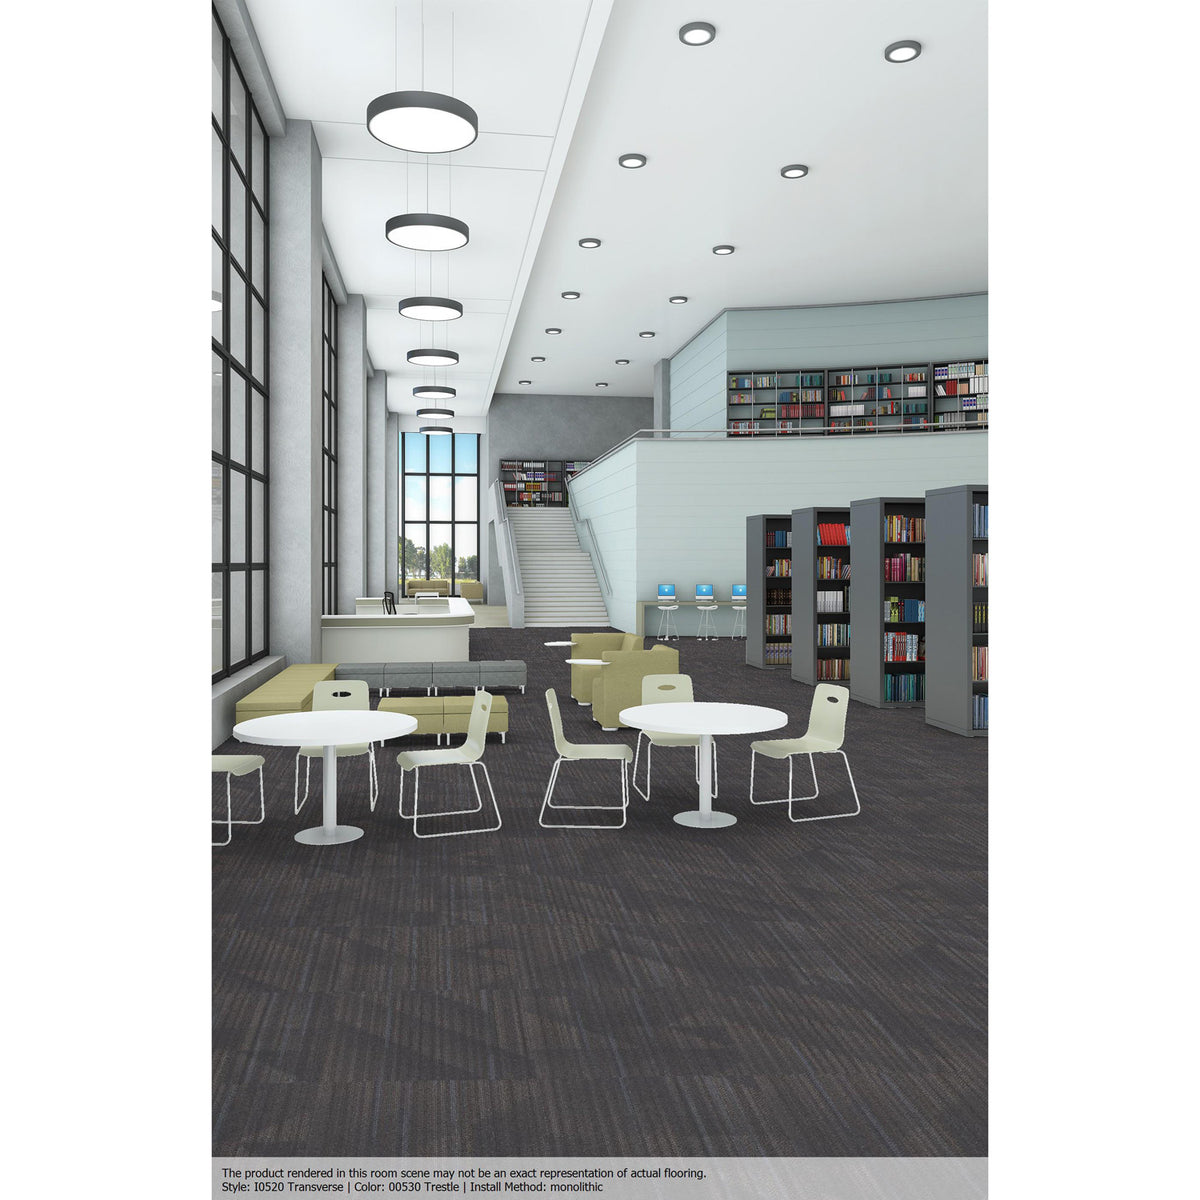 Patcraft - Infrastructure Collection - Transverse Carpet Tile - Trestle